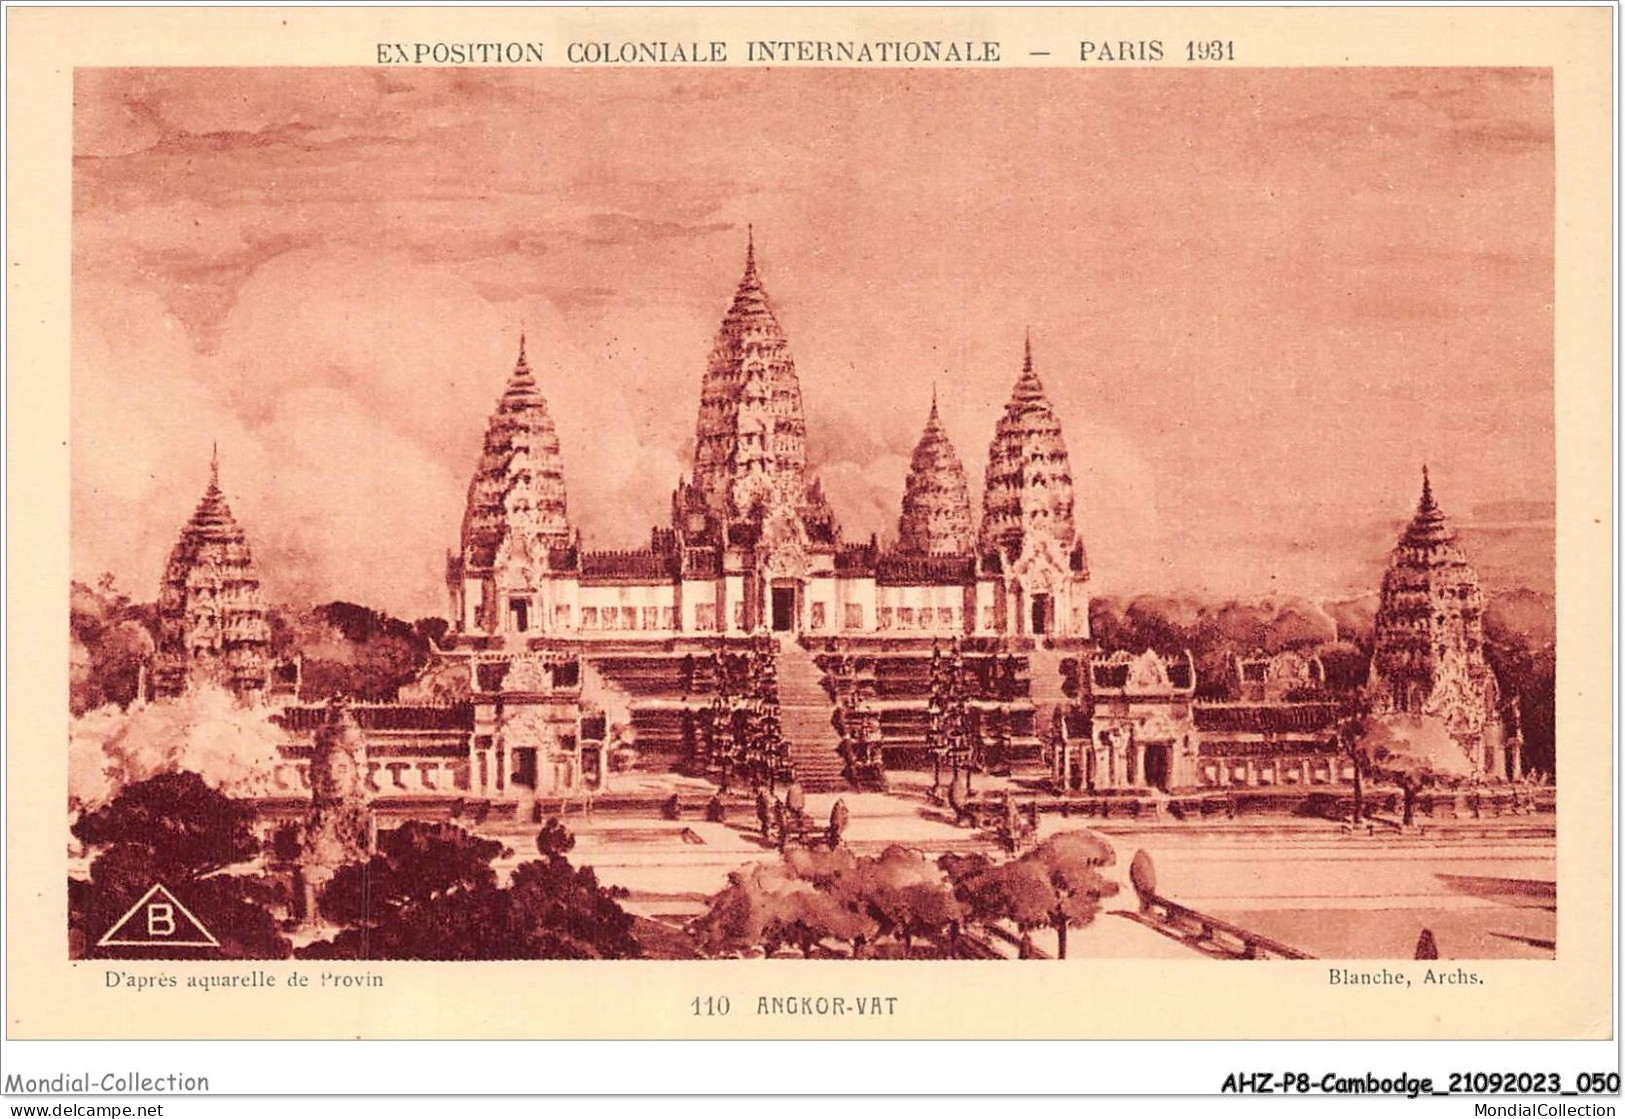 AHZP8-CAMBODGE-0708 - EXPOSITION COLONIALE INTERNATIONALE - PARIS 1931 - ANGKOR-VAT - Cambodia